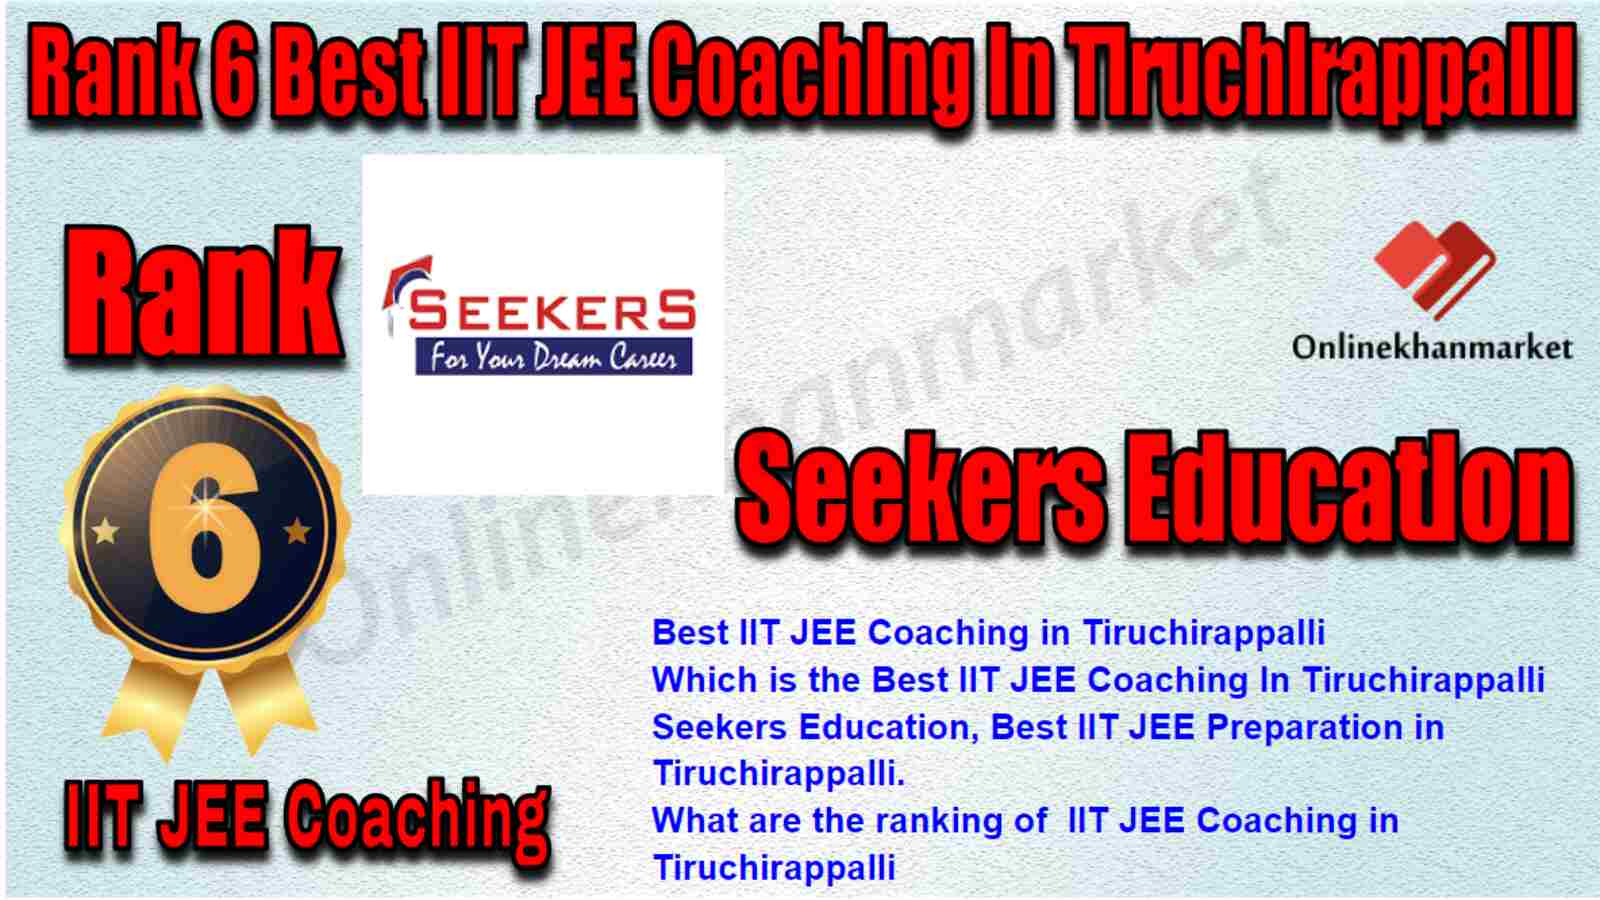 Rank 6 Best IIT JEE Coaching in Tiruchirappalli